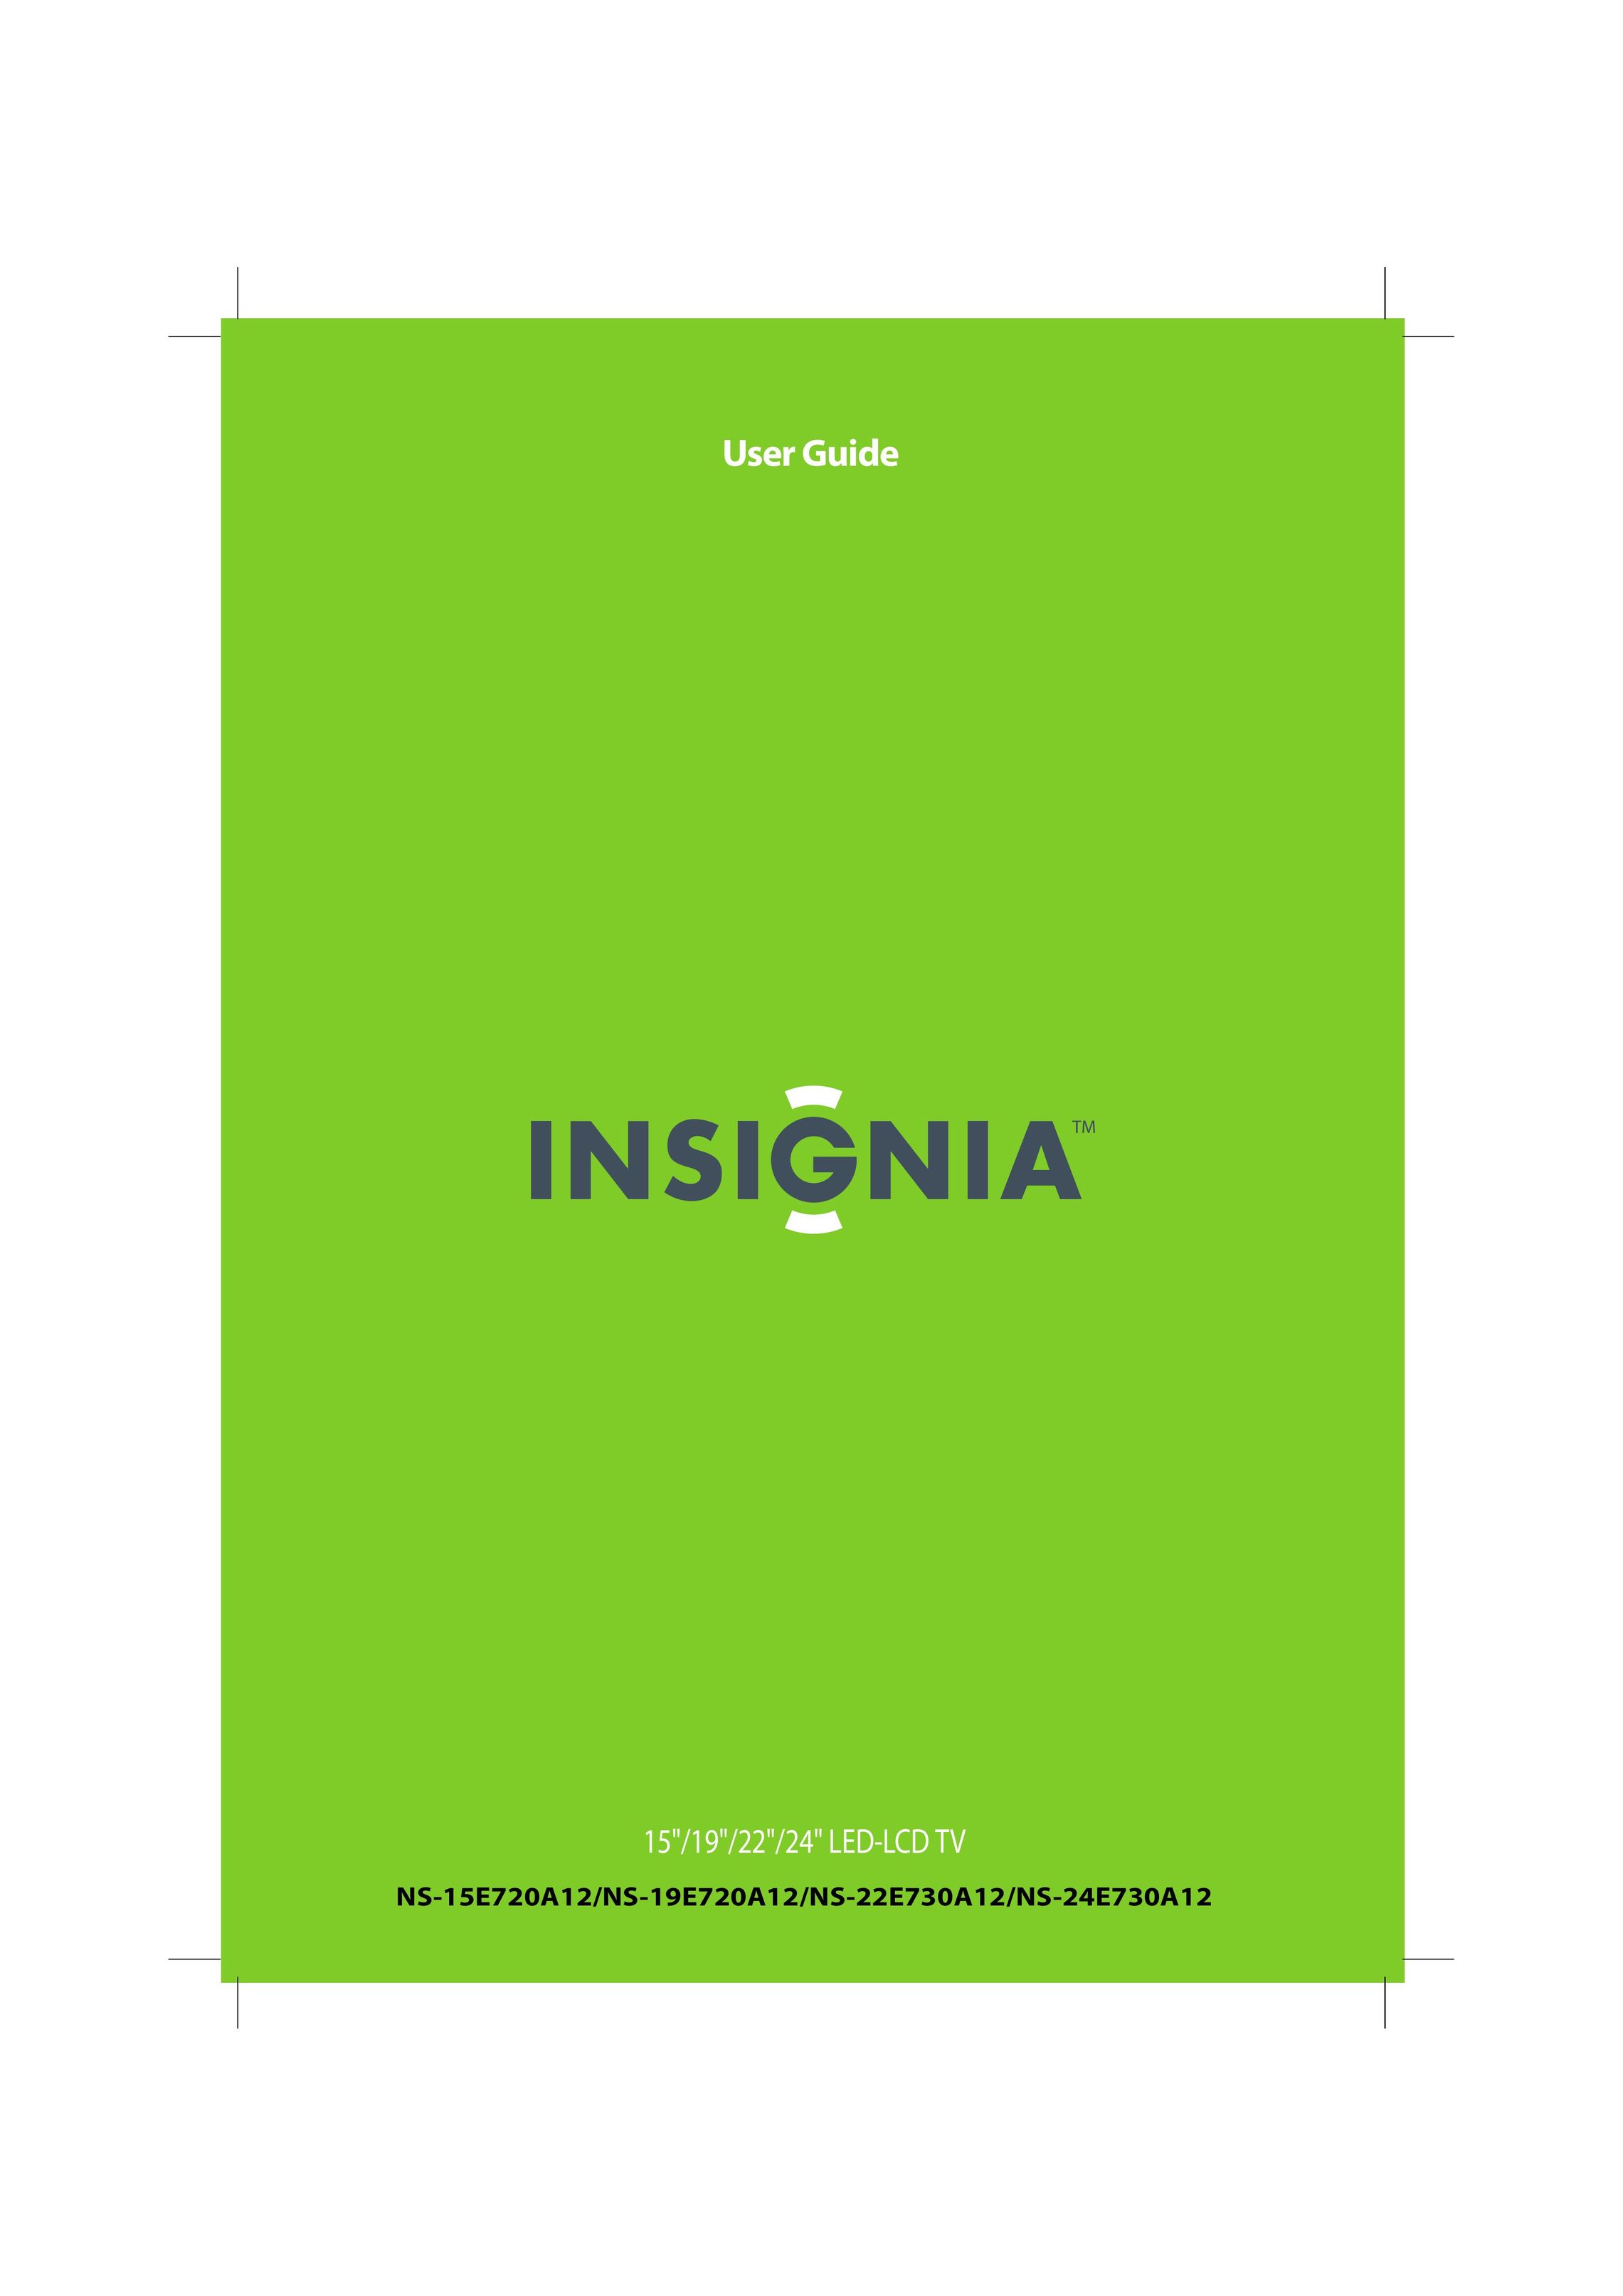 Insignia NS-19E720A12 CRT Television User Manual